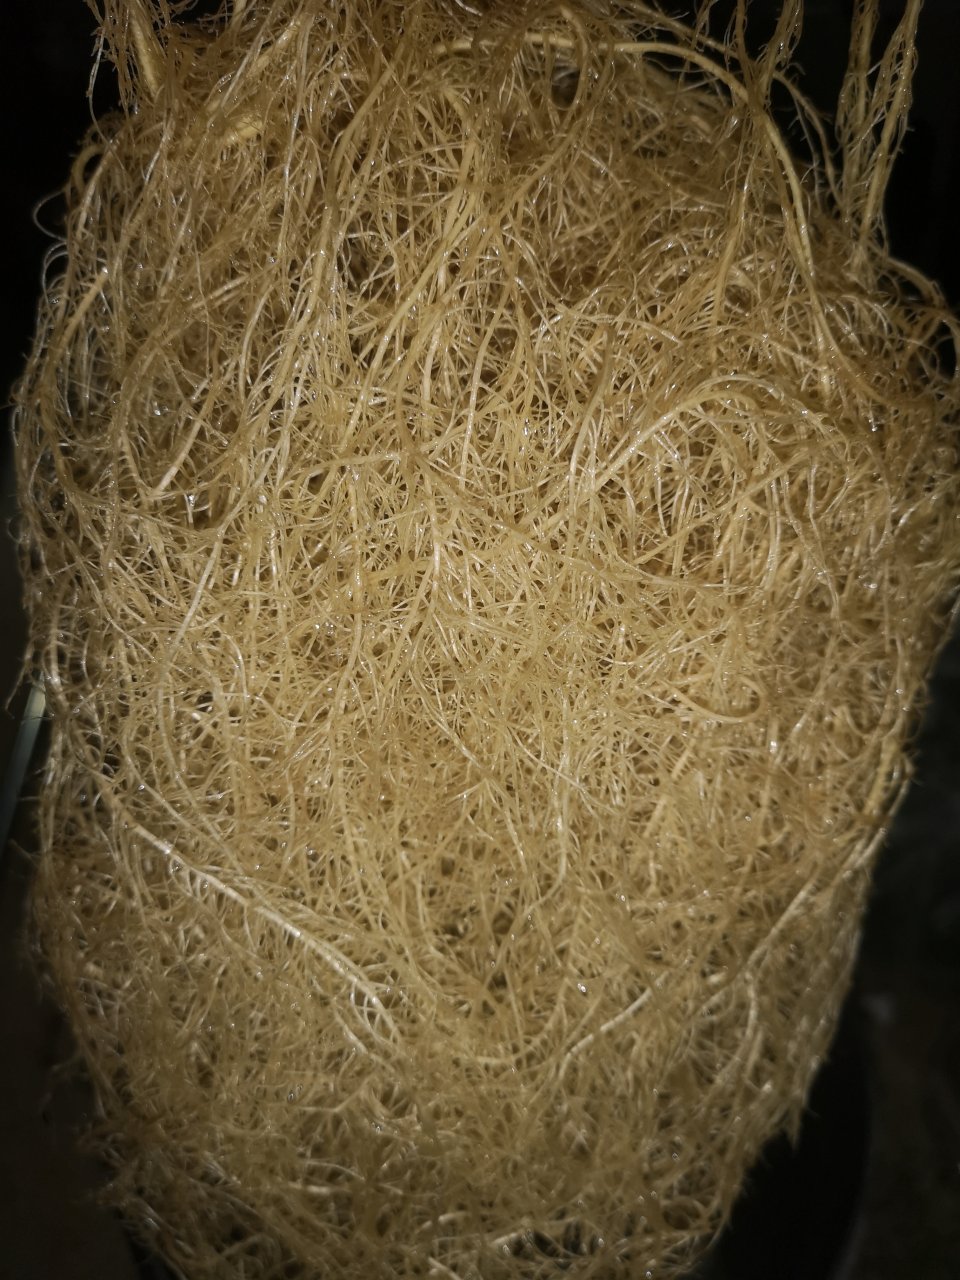 Jack Herer - harvest root mass